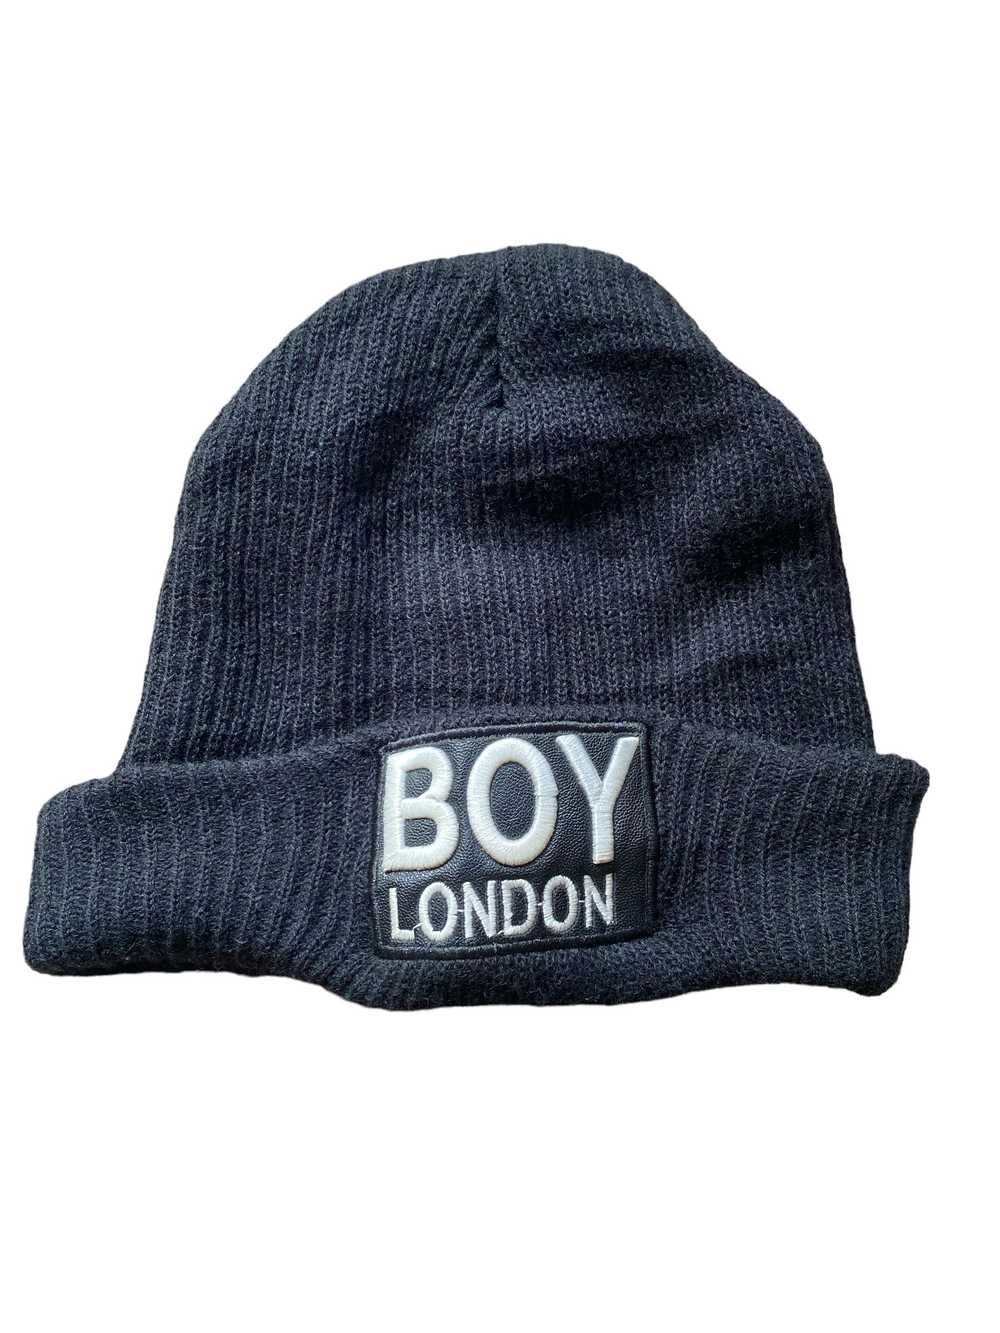 Boy London Beanies Hat - image 6